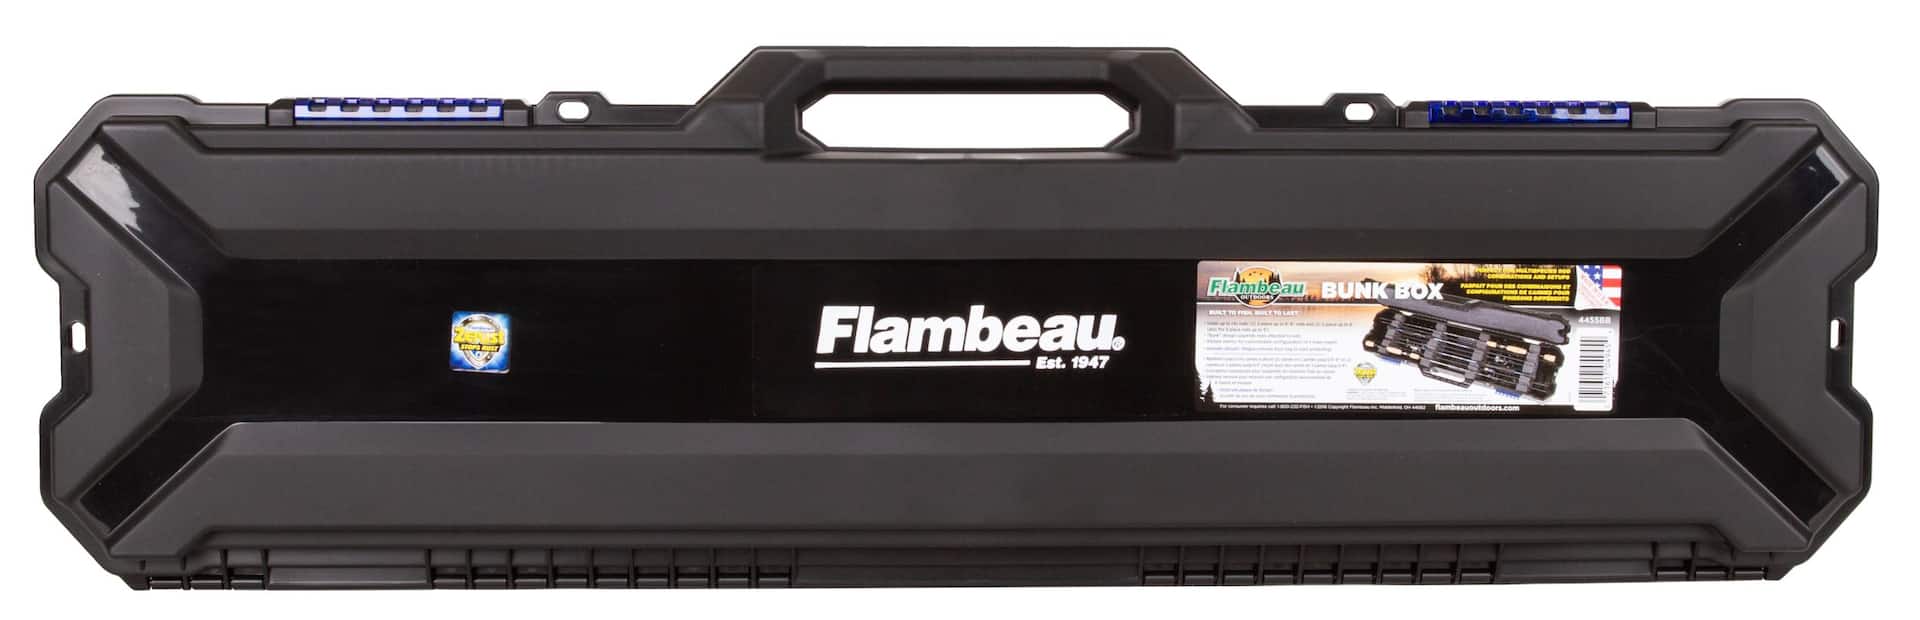 Flambeau Rod Bunk Box, Black